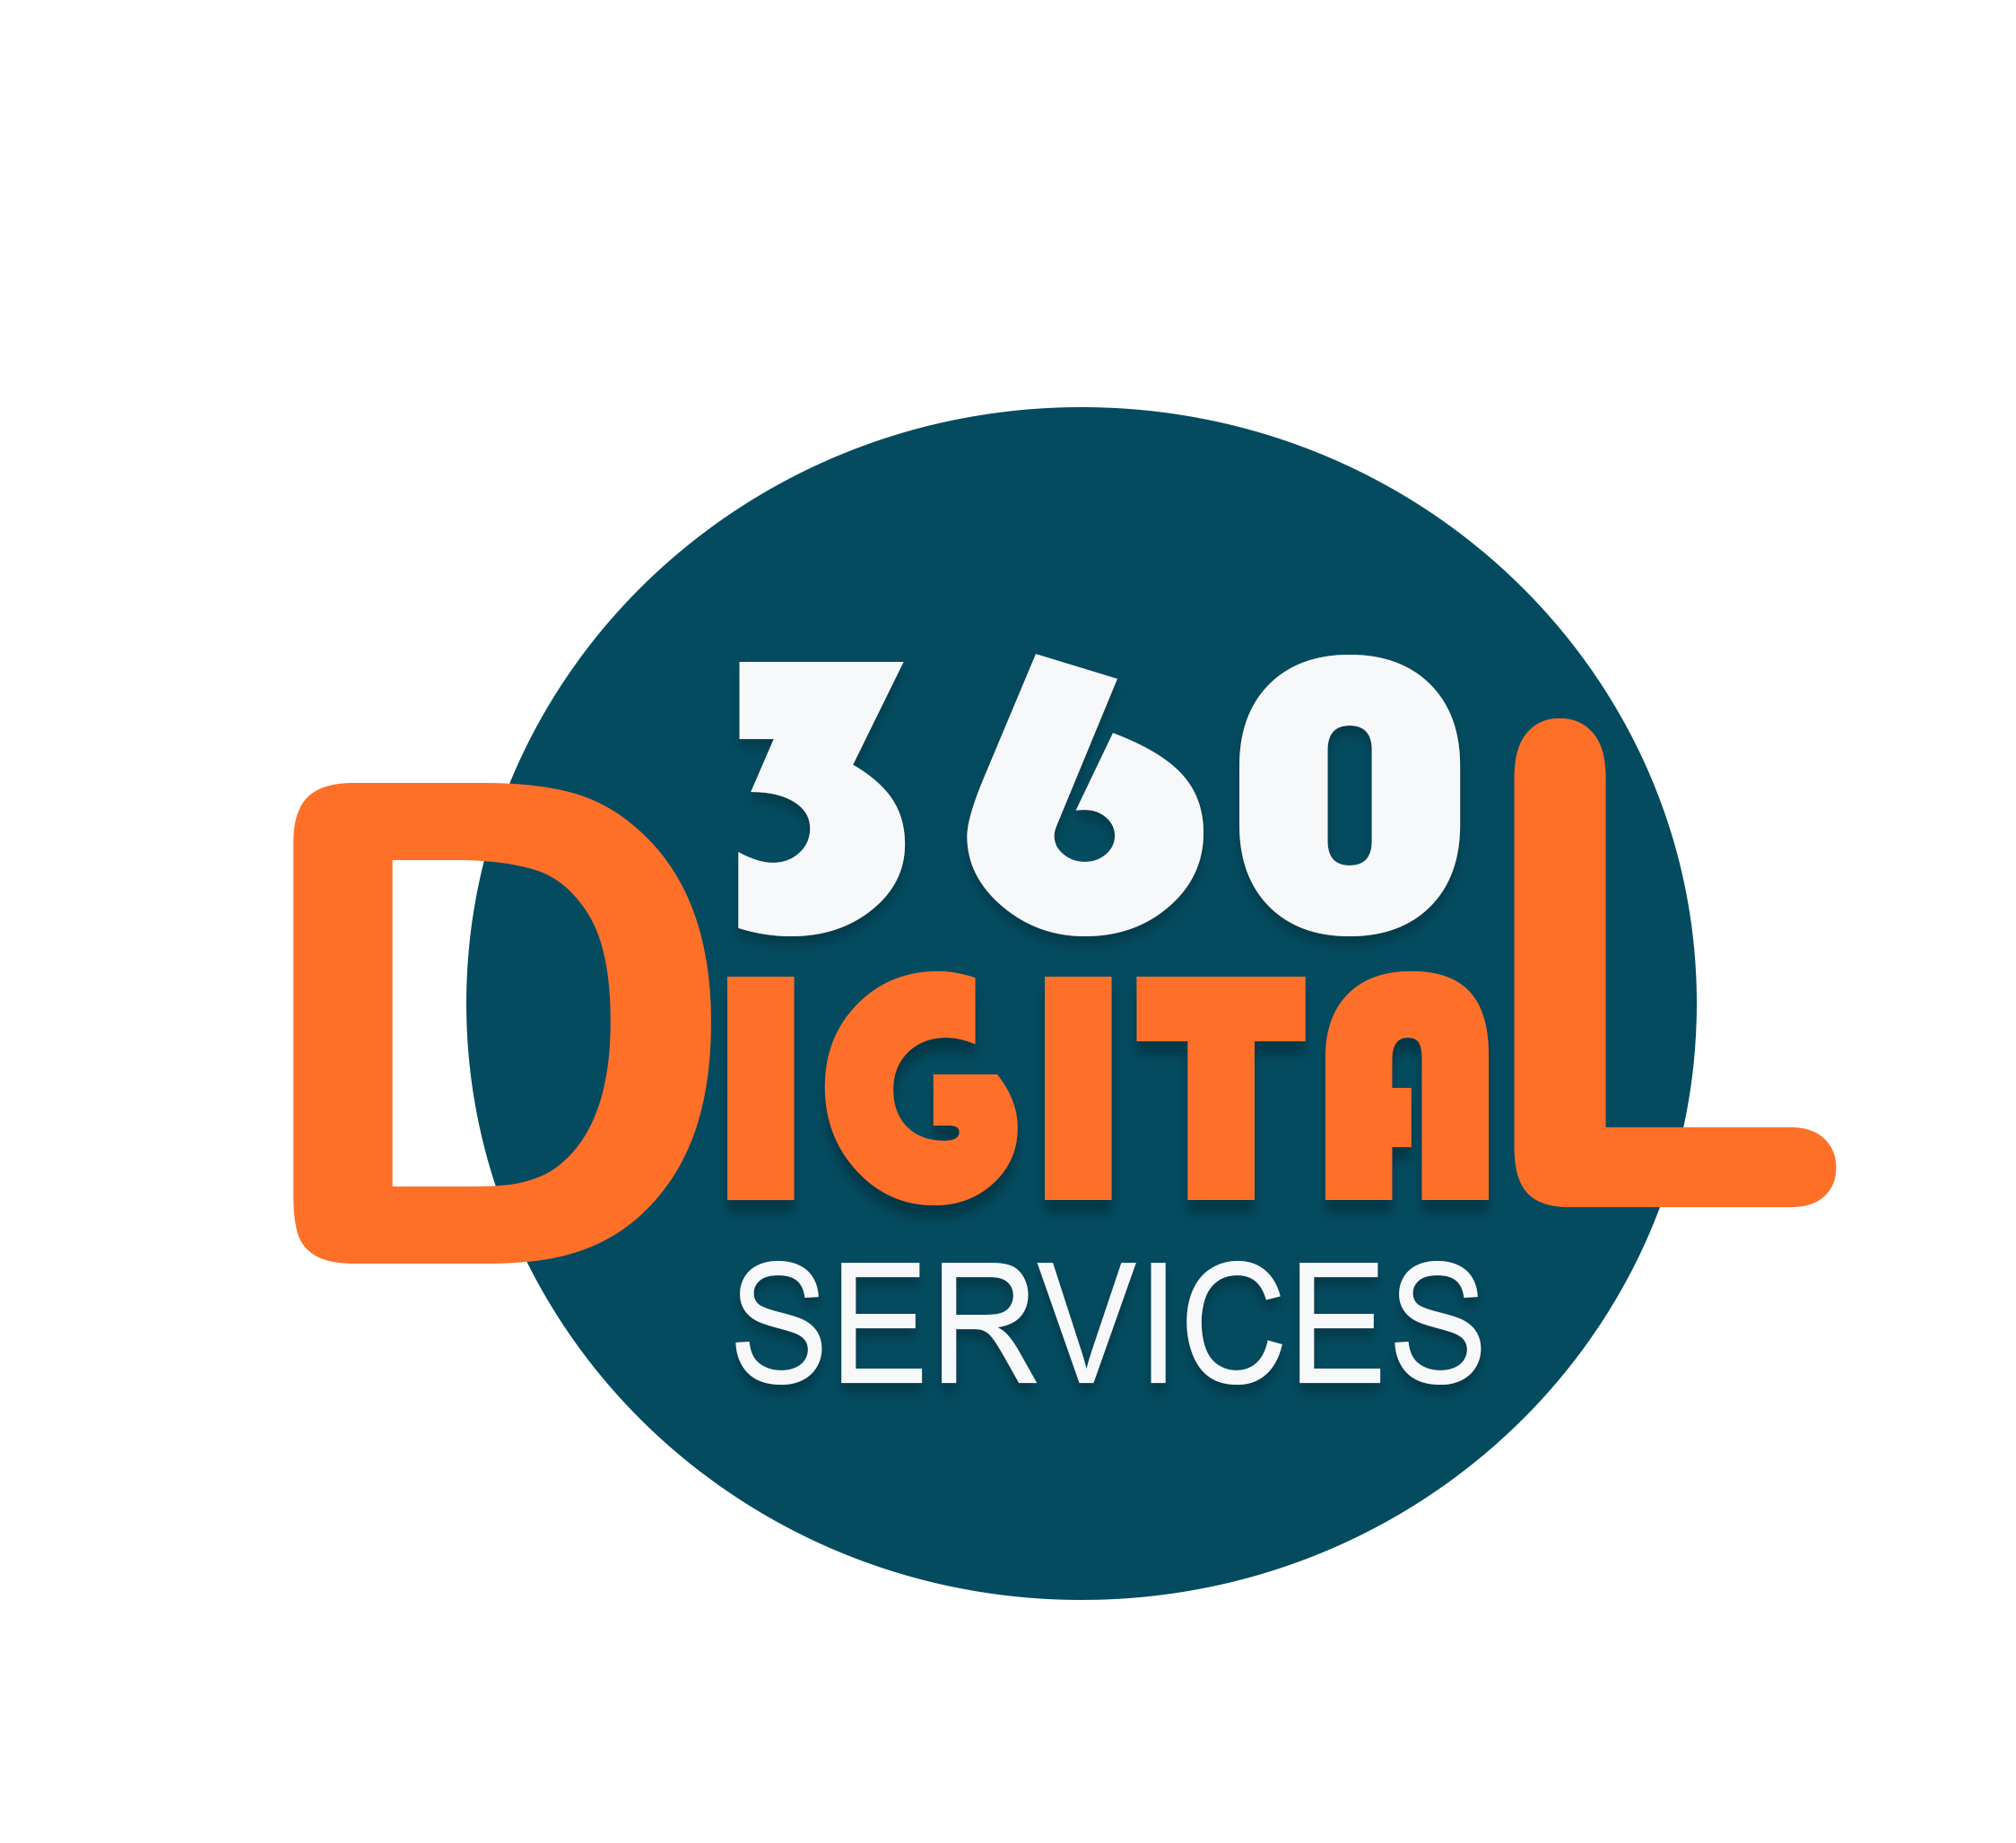 360 Digital Services Services